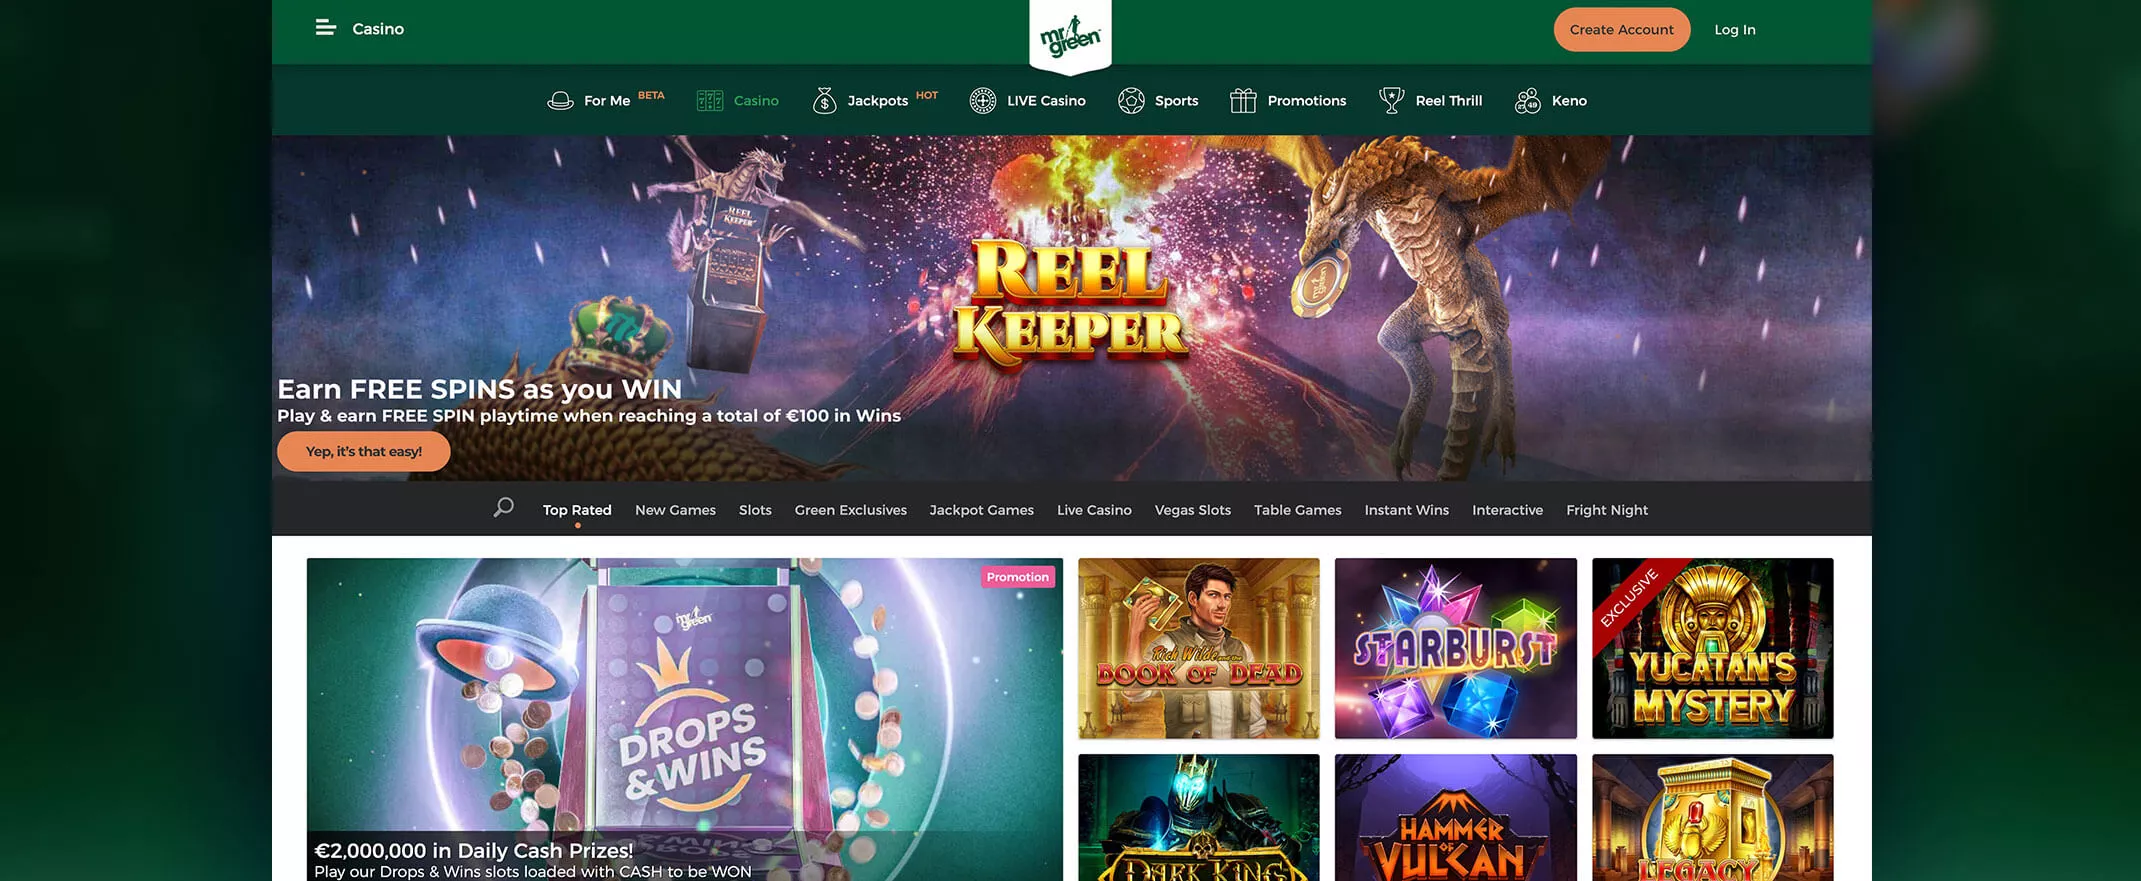 Mr Green casino games screenshot